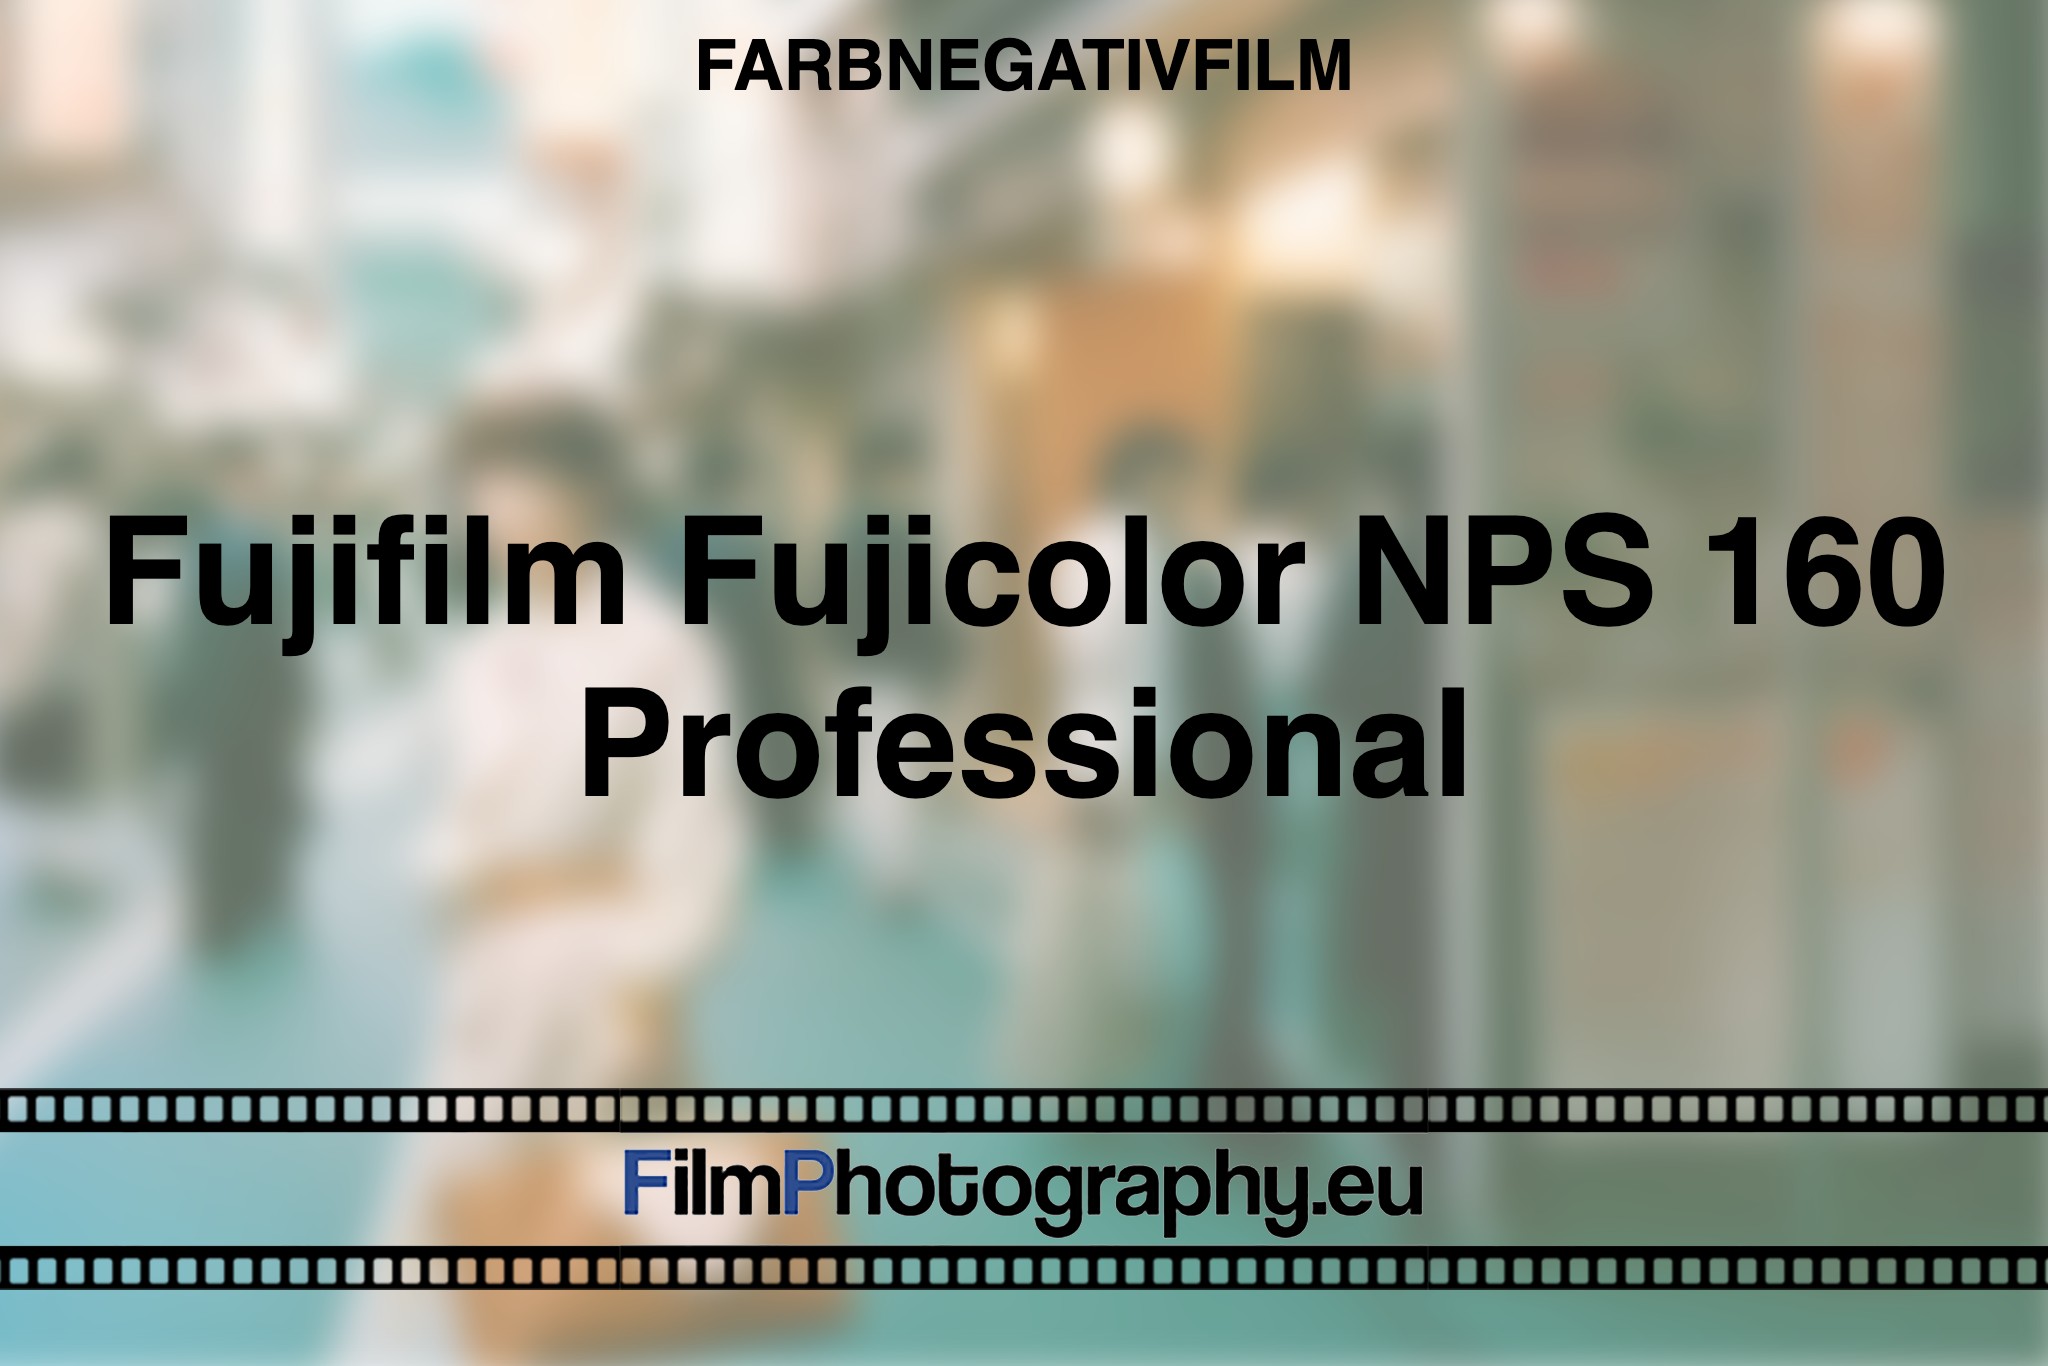 fujifilm-fujicolor-nps-160-professional-farbnegativfilm-bnv